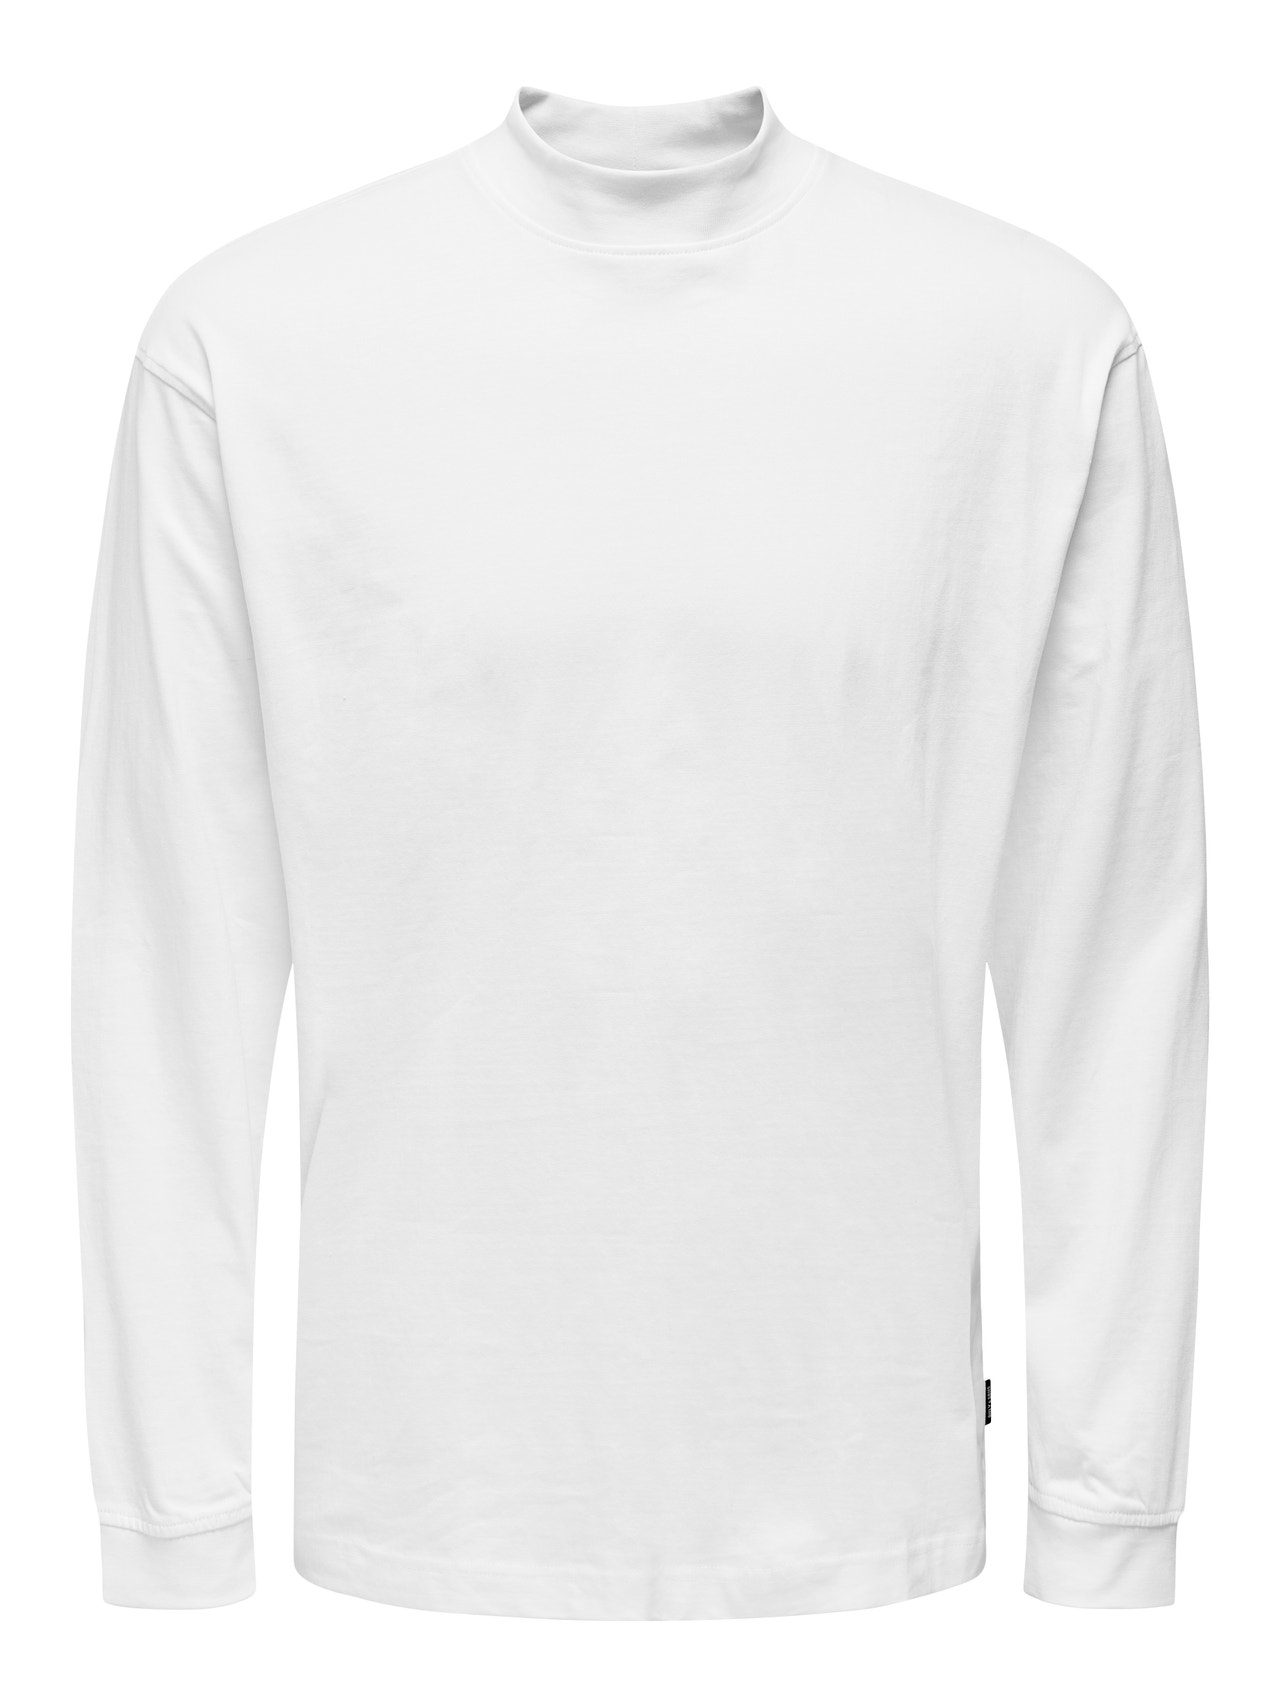 Locker geschnitten Stehkragen T-Shirt | Weiß | ONLY & SONS®